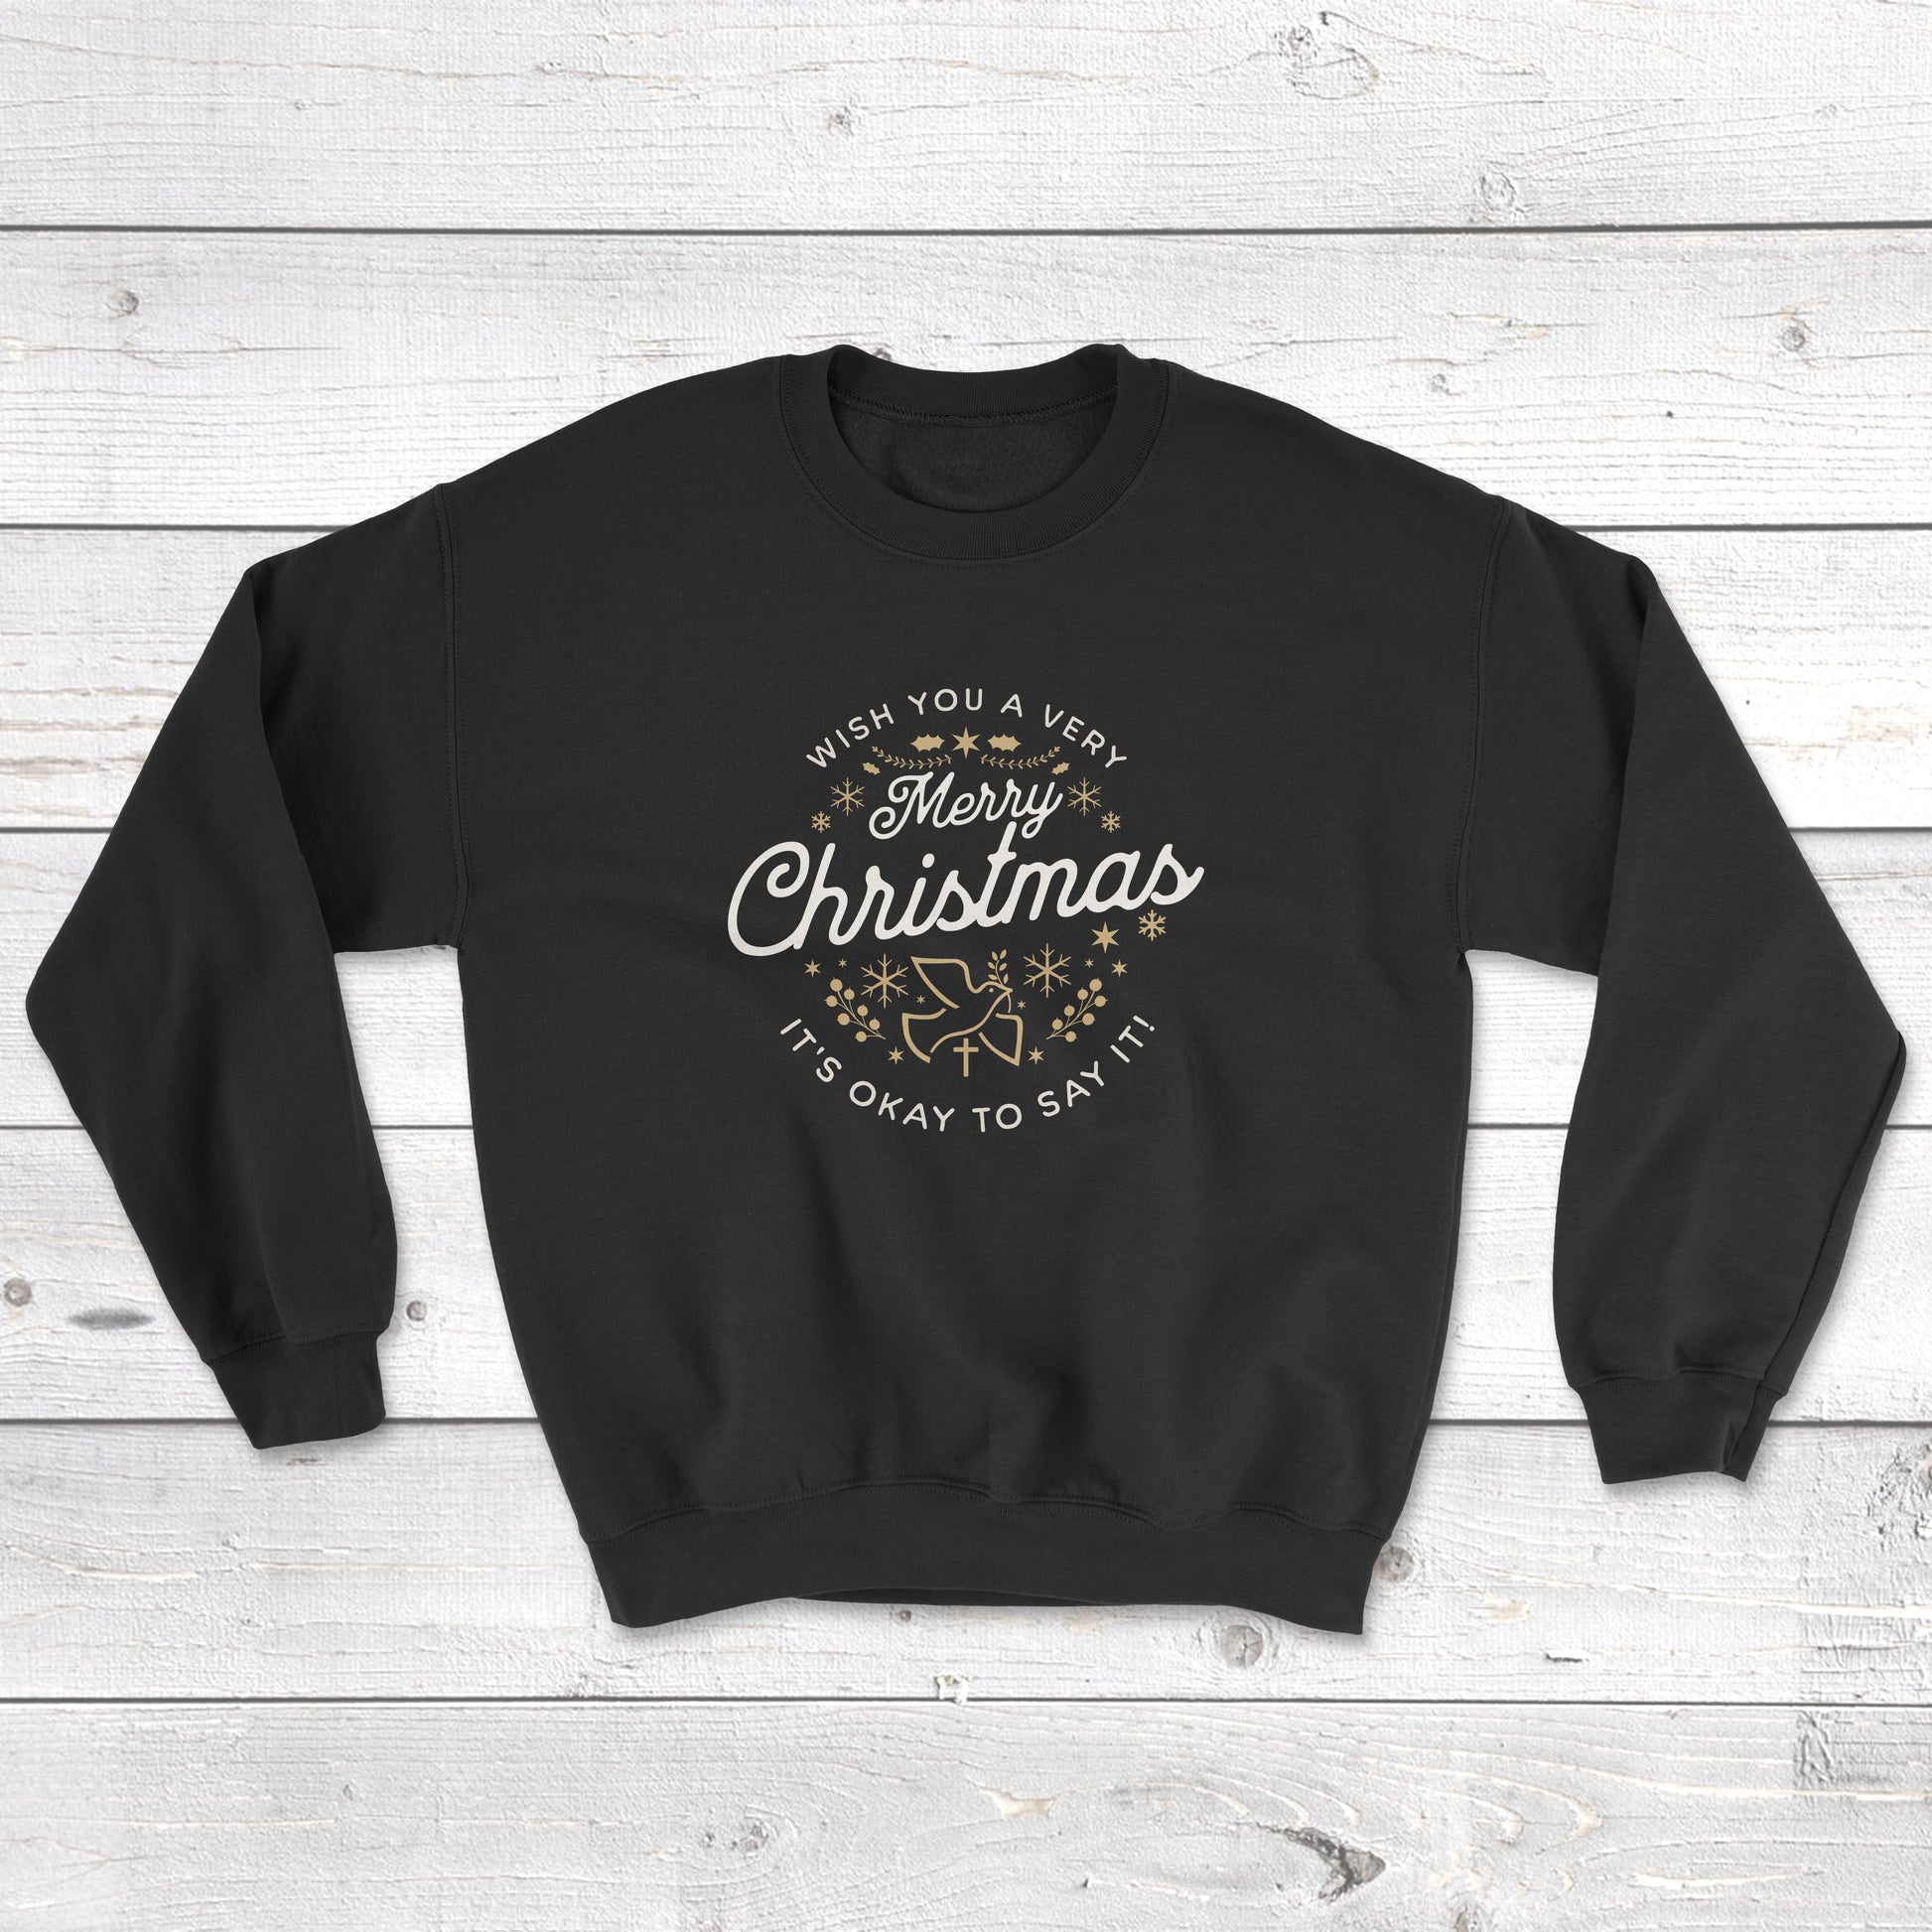 Merry Christmas, it's okay to say it sweatshirt in black